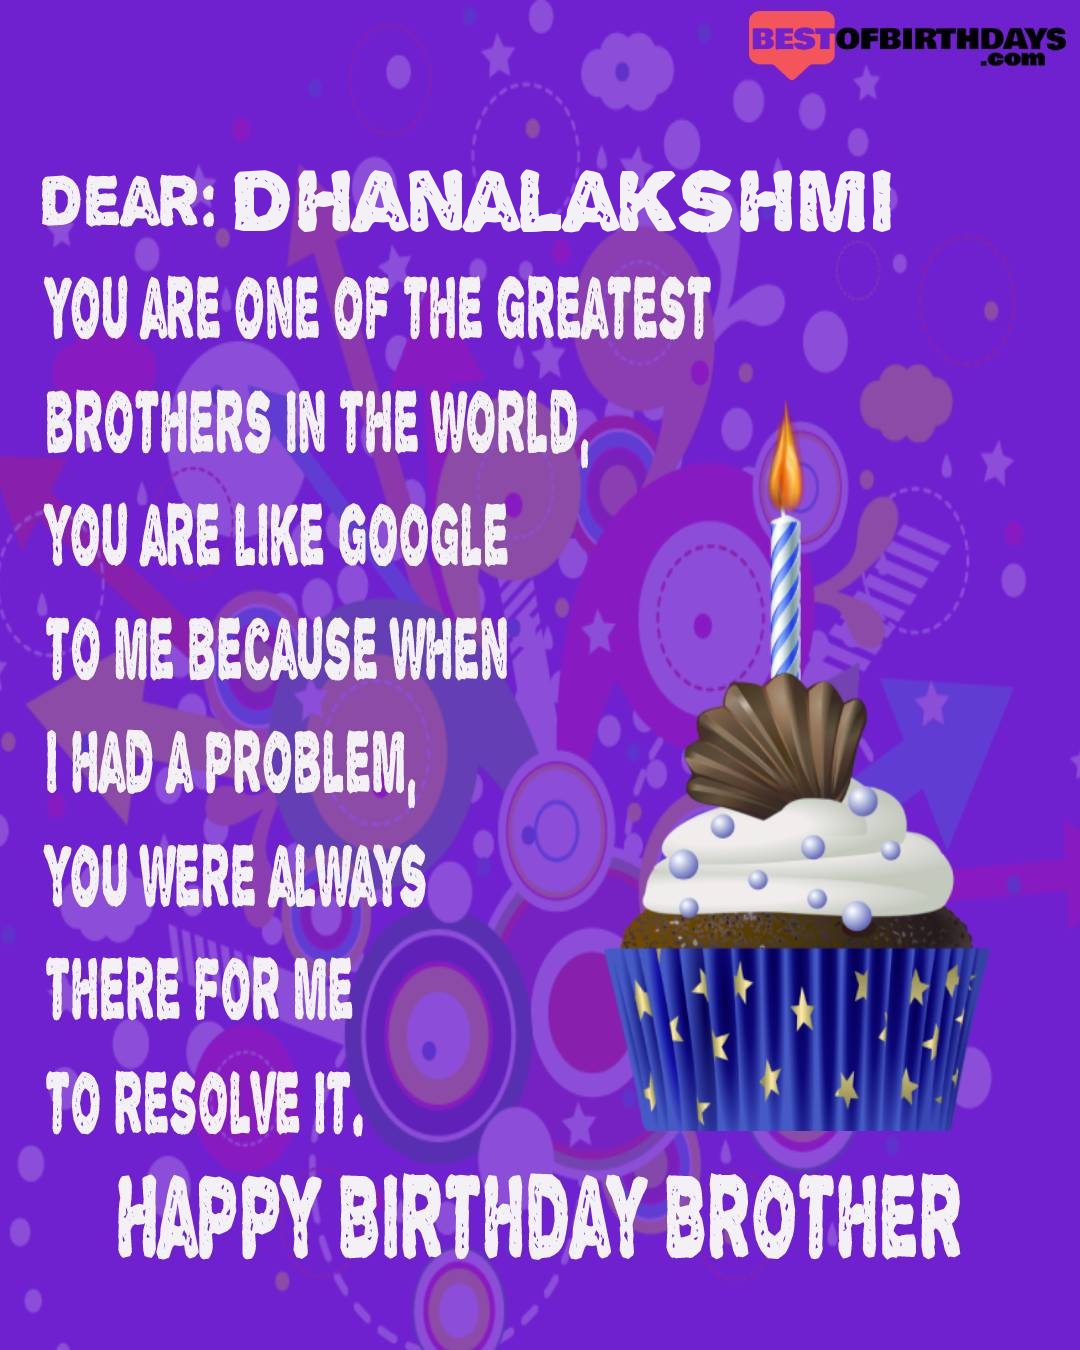 Happy birthday dhanalakshmi bhai brother bro